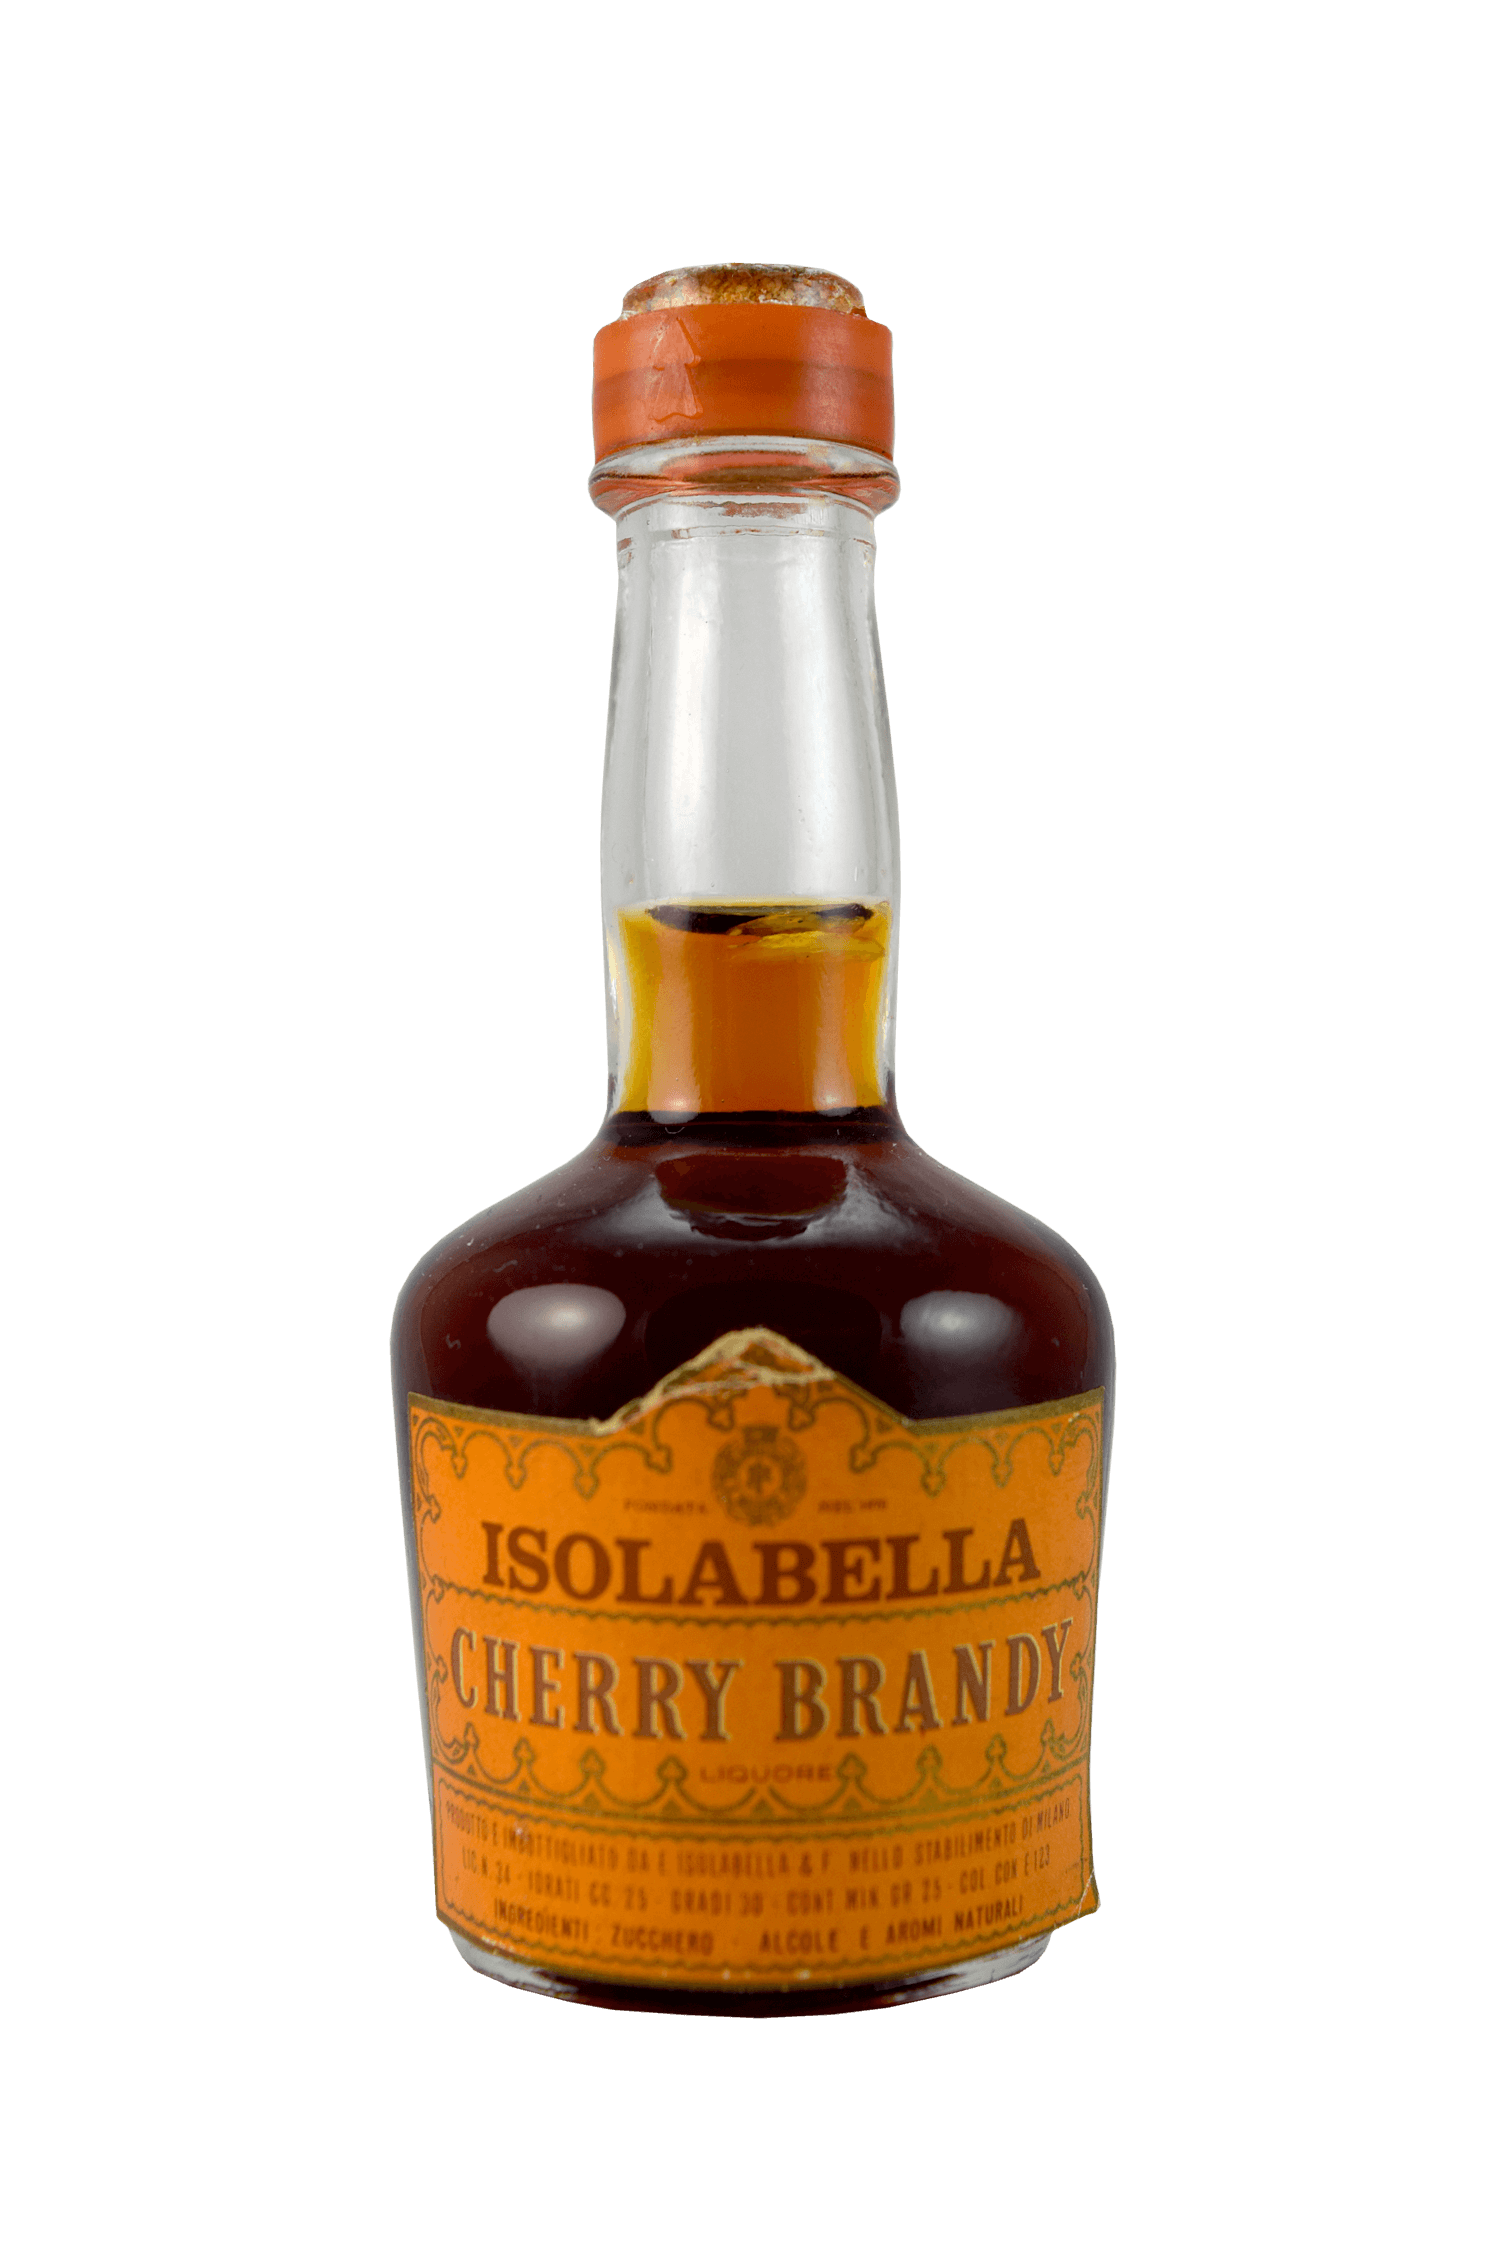 Isolabella Cherry Brandy